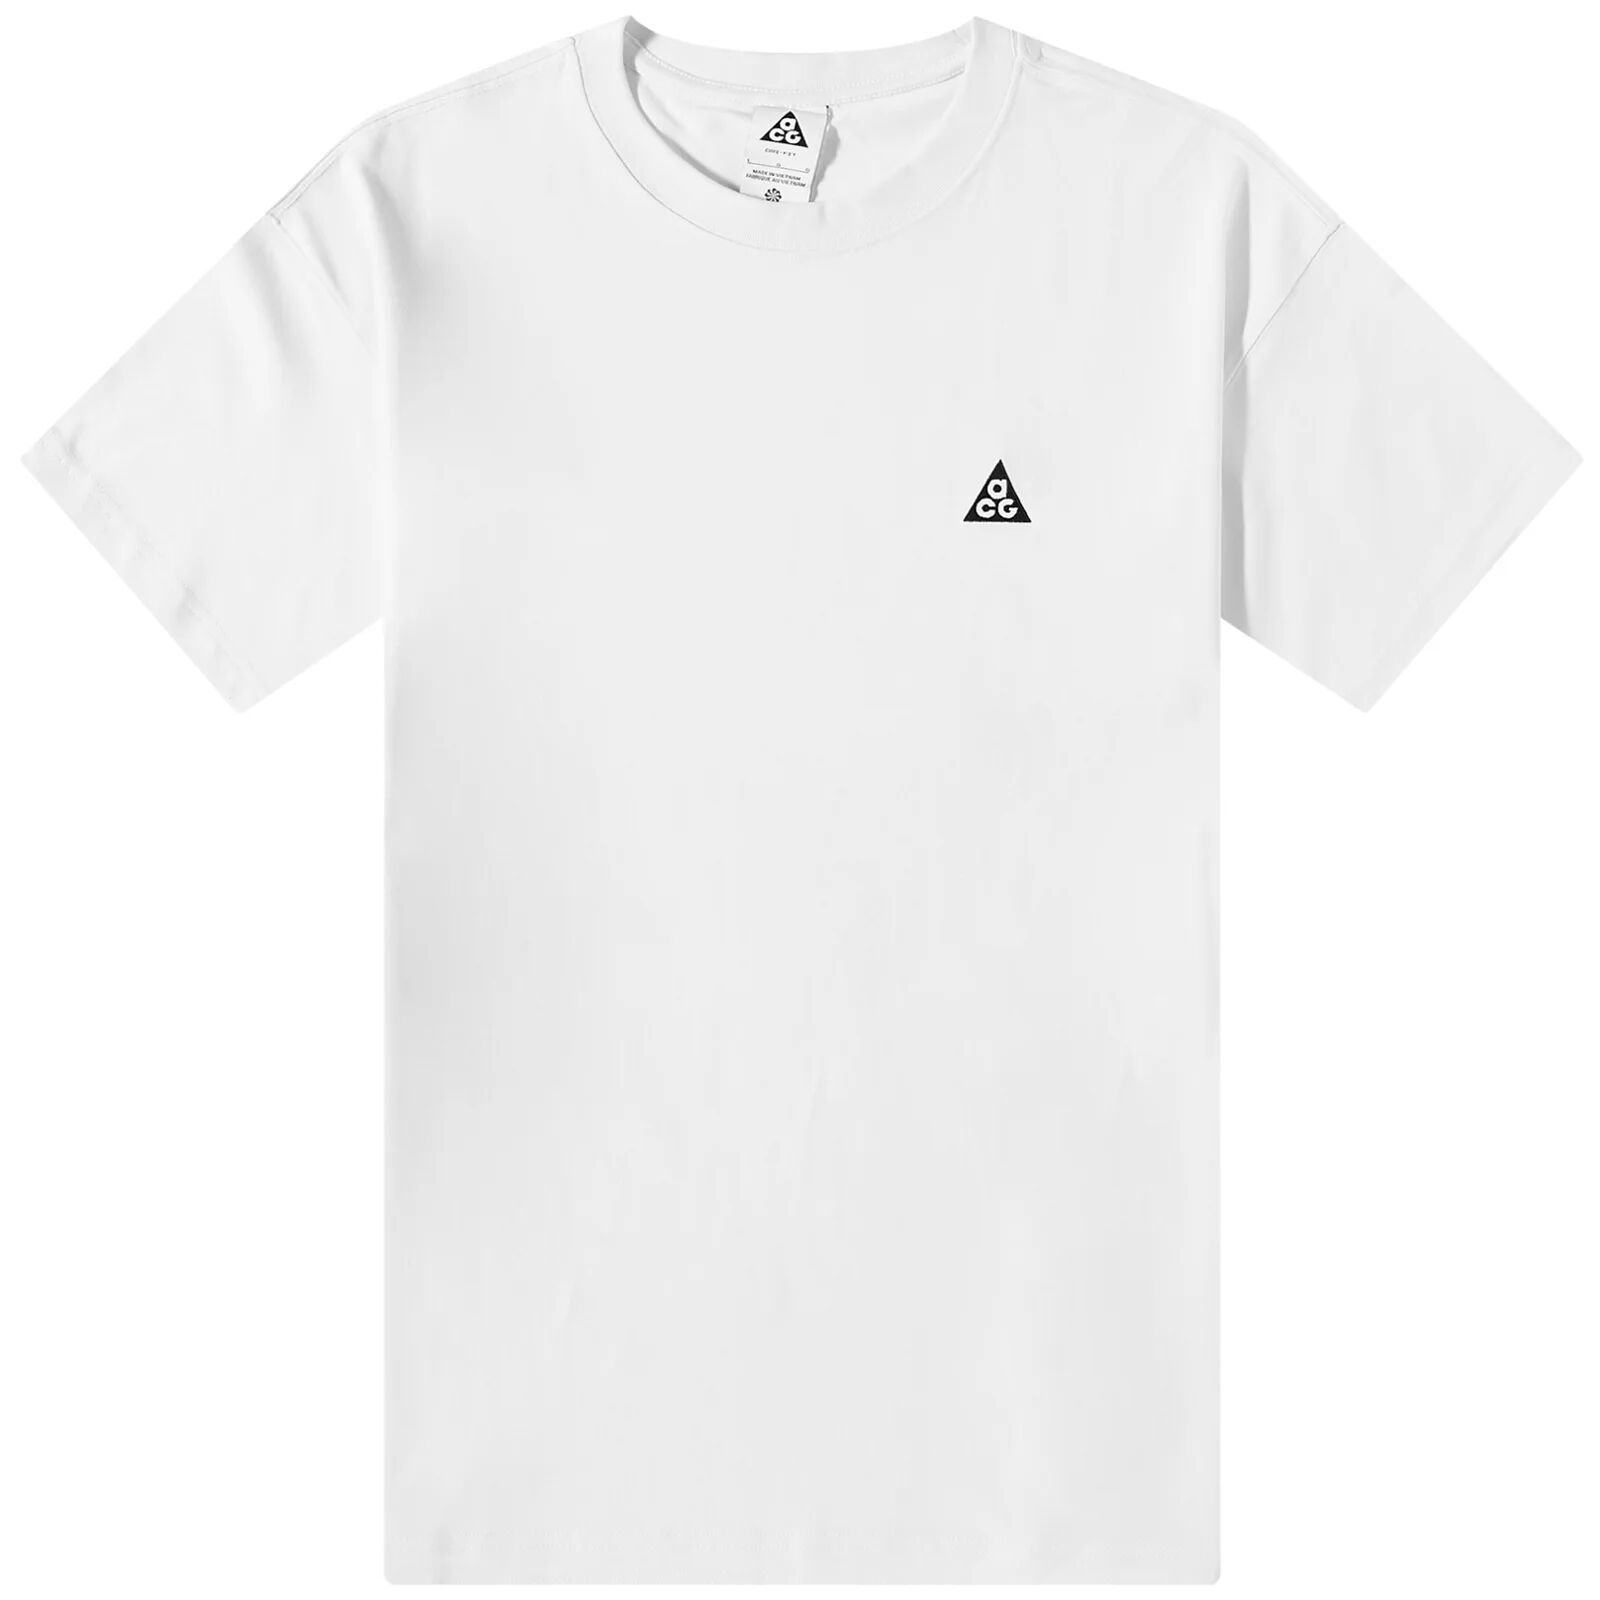 Nike Men's ACG Logo T-Shirt in Summit White, Size Medium